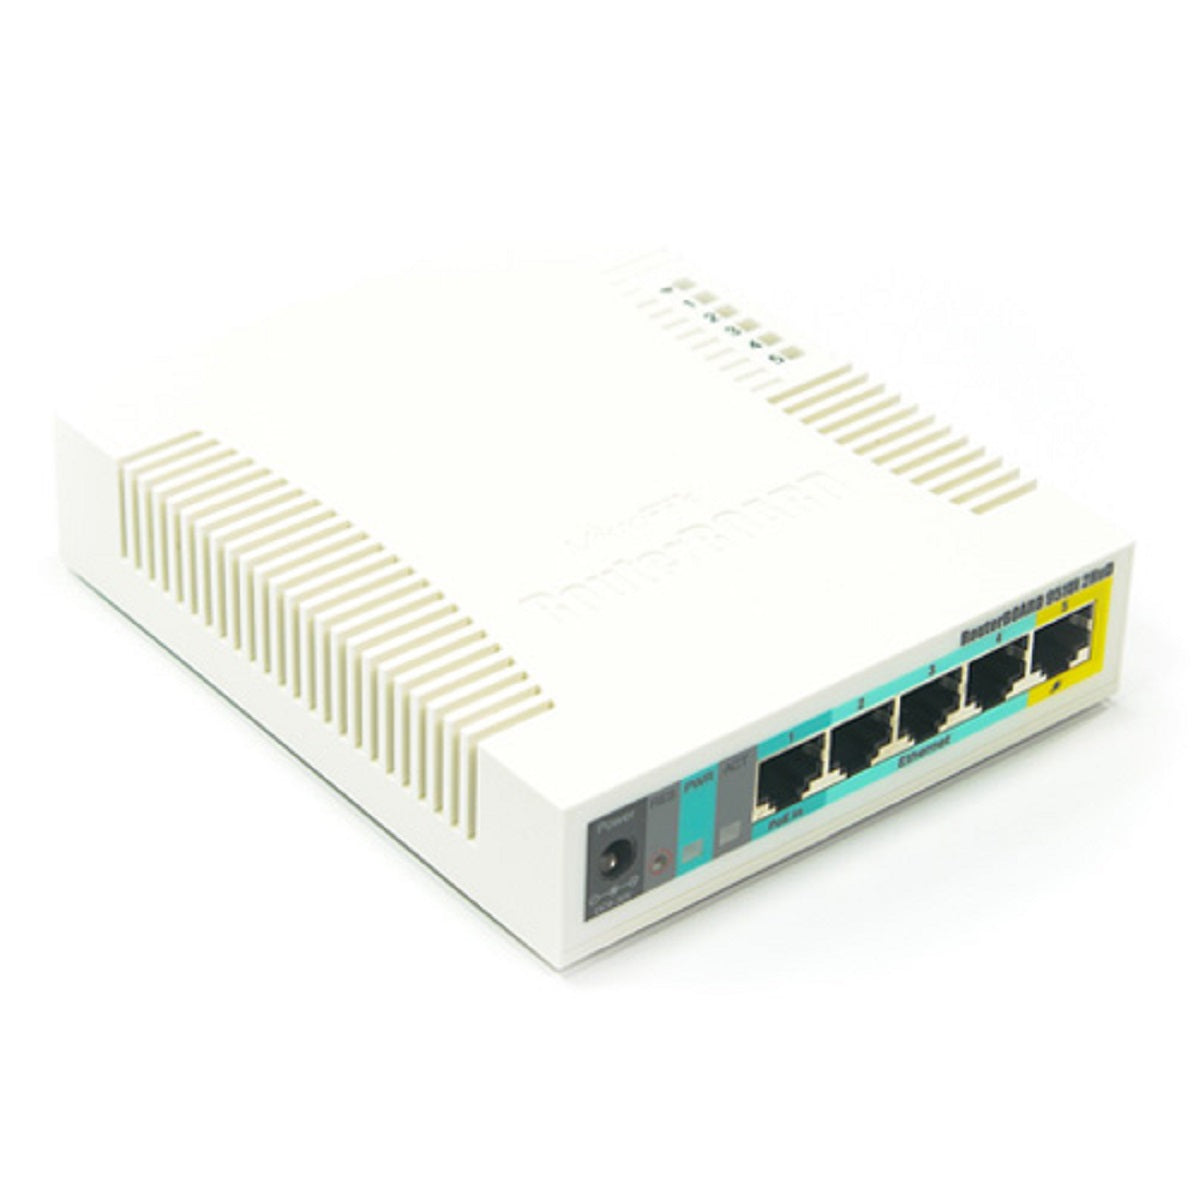 MikroTik RB951Ui-2HnD WiFi 4 Access Point (N)